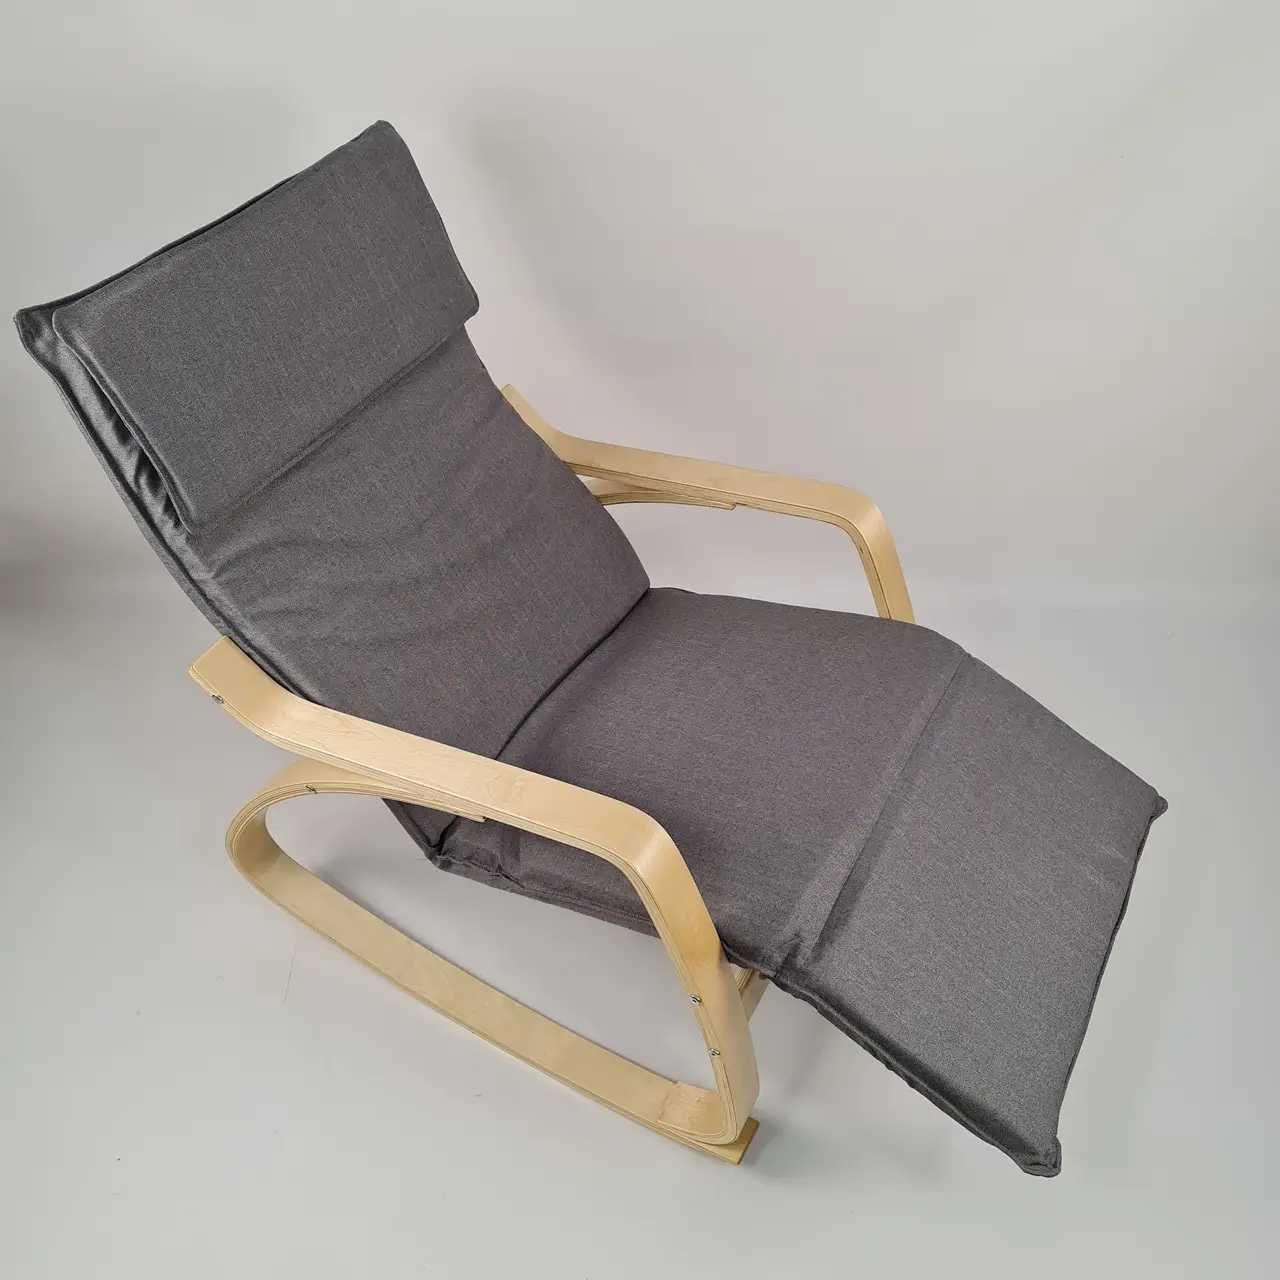 Крісло гойдалка для квартири, кресло качалка Style RC001 Natural Gray